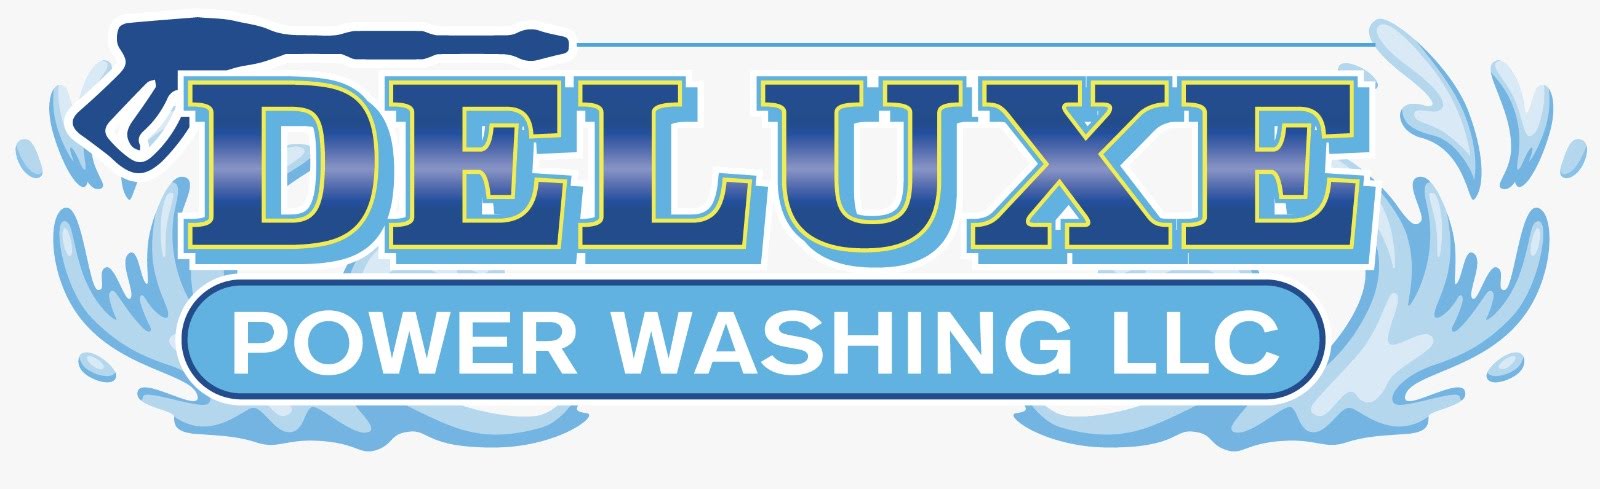 Deluxe Power Washing, LLC Logo